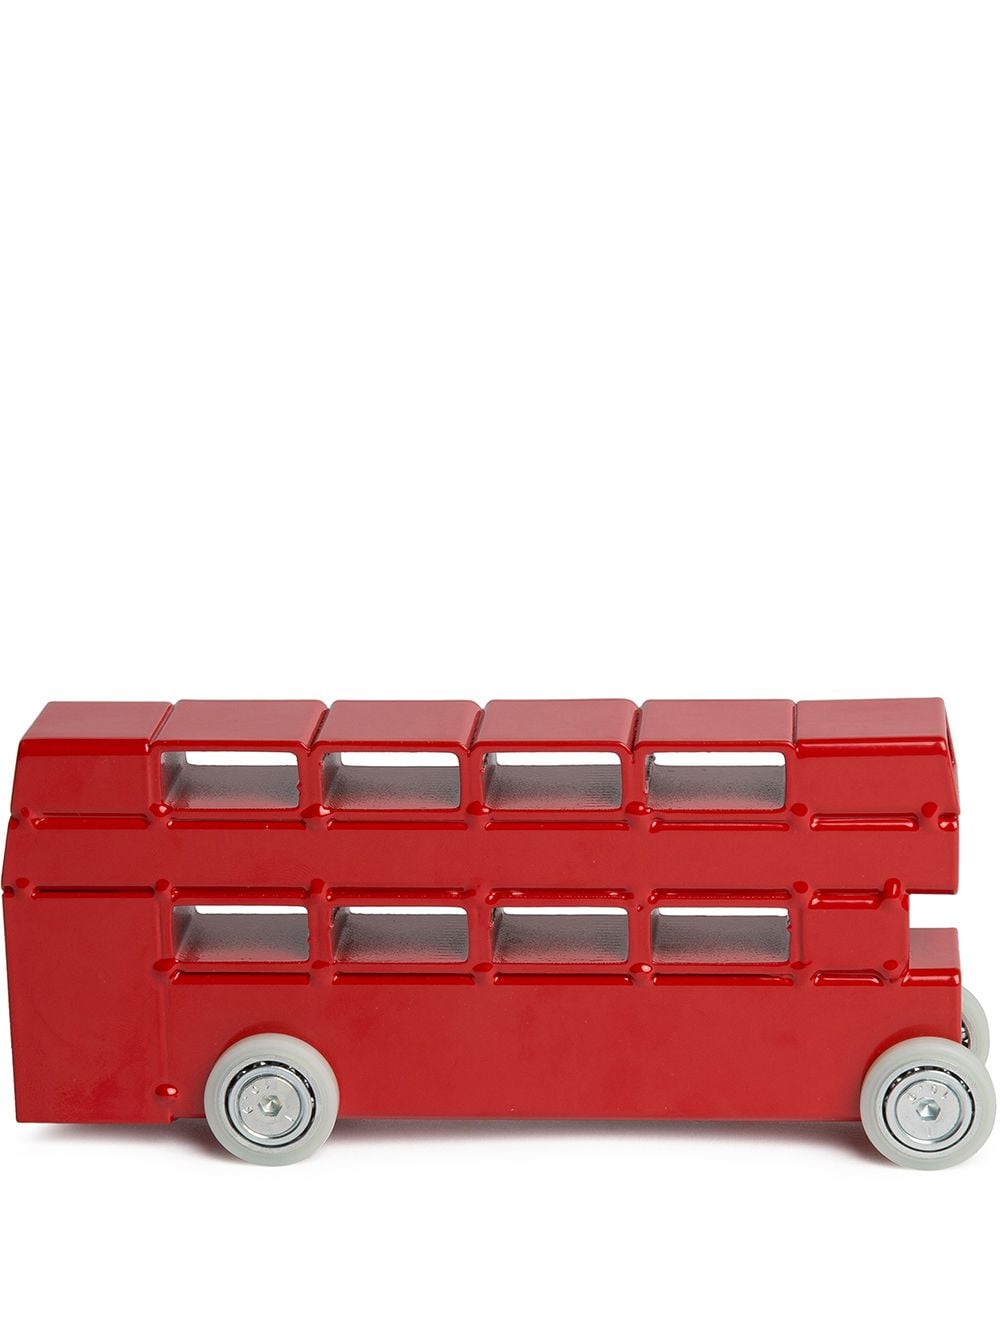 magis Archetoys London Bus - Red von magis